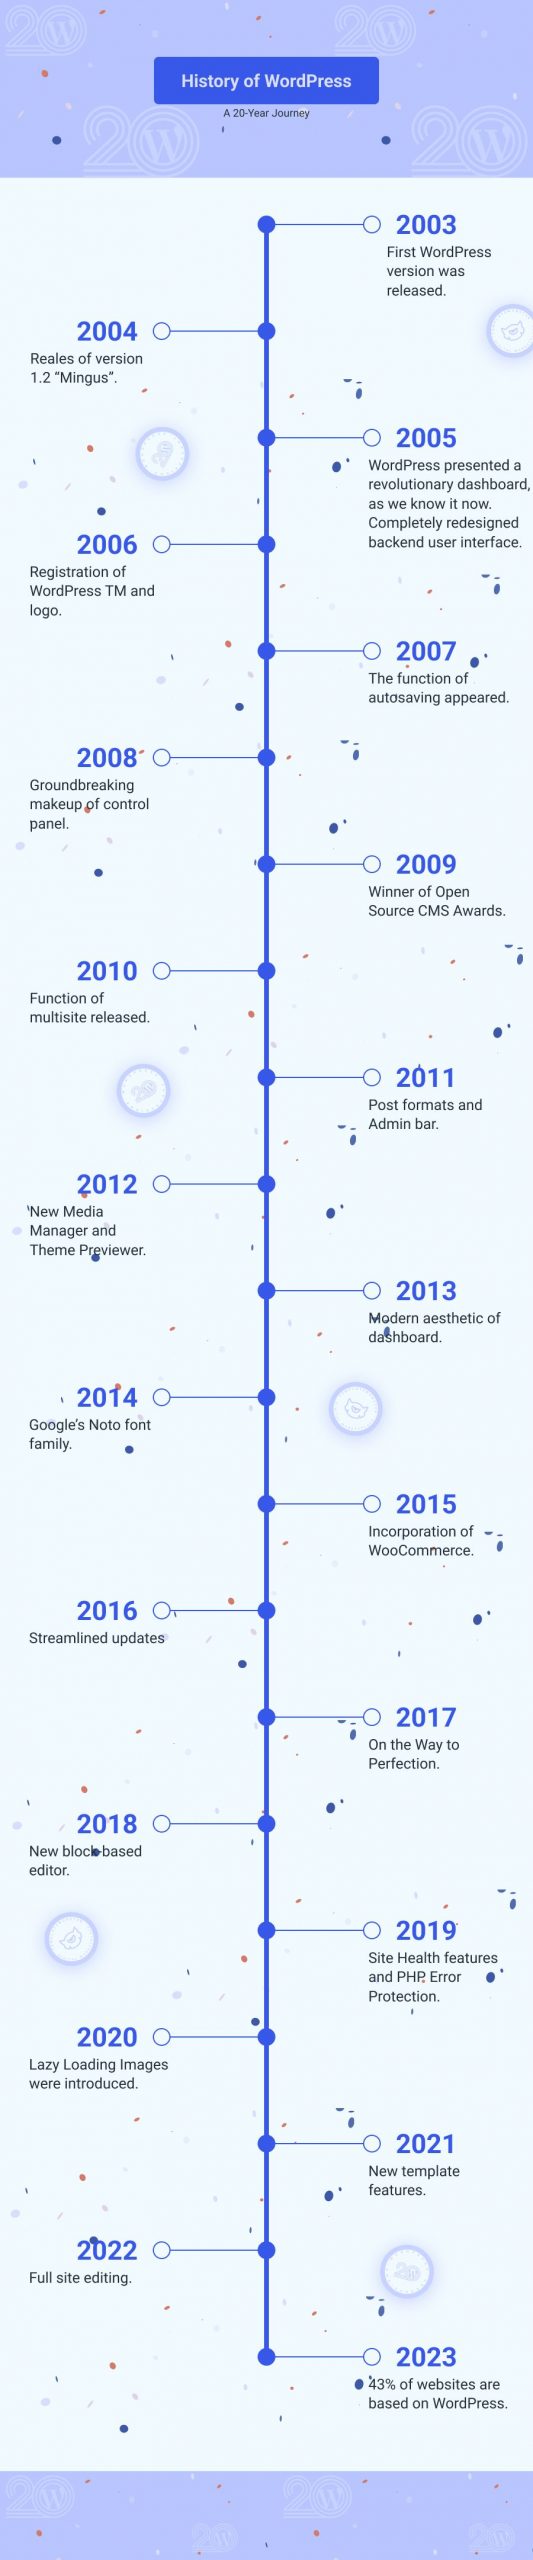 WordPress & TemplateMonster history timeline